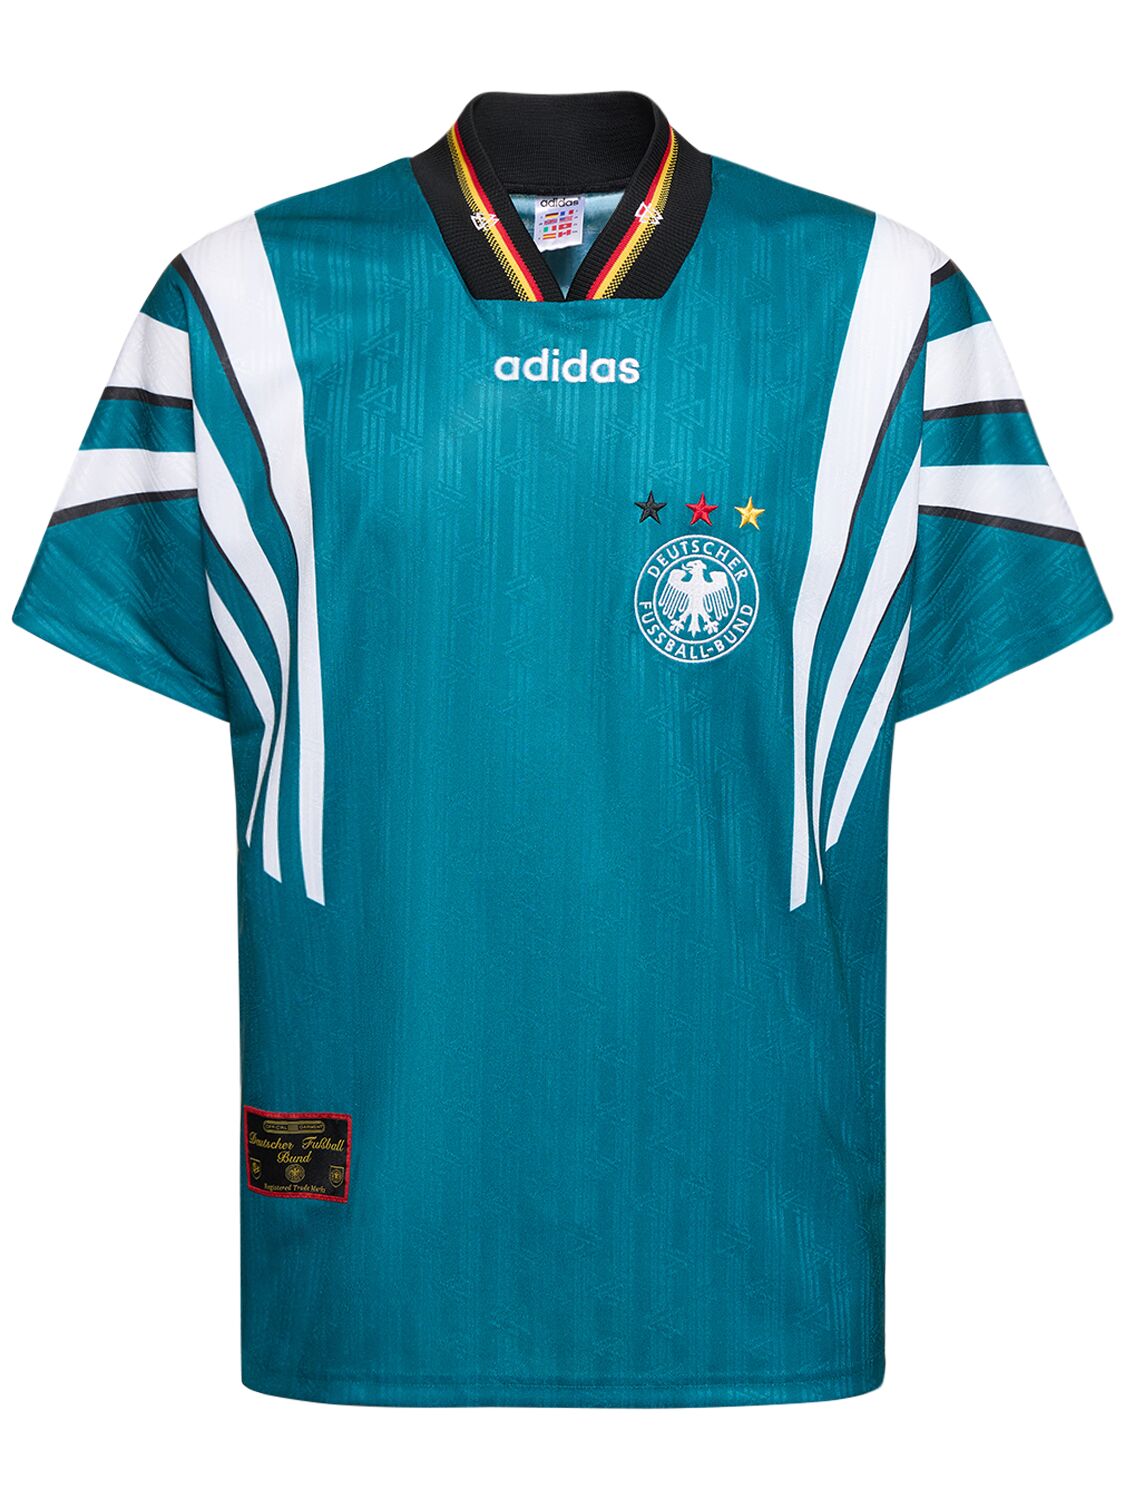 Adidas Originals Germany 96 Jersey In Blue